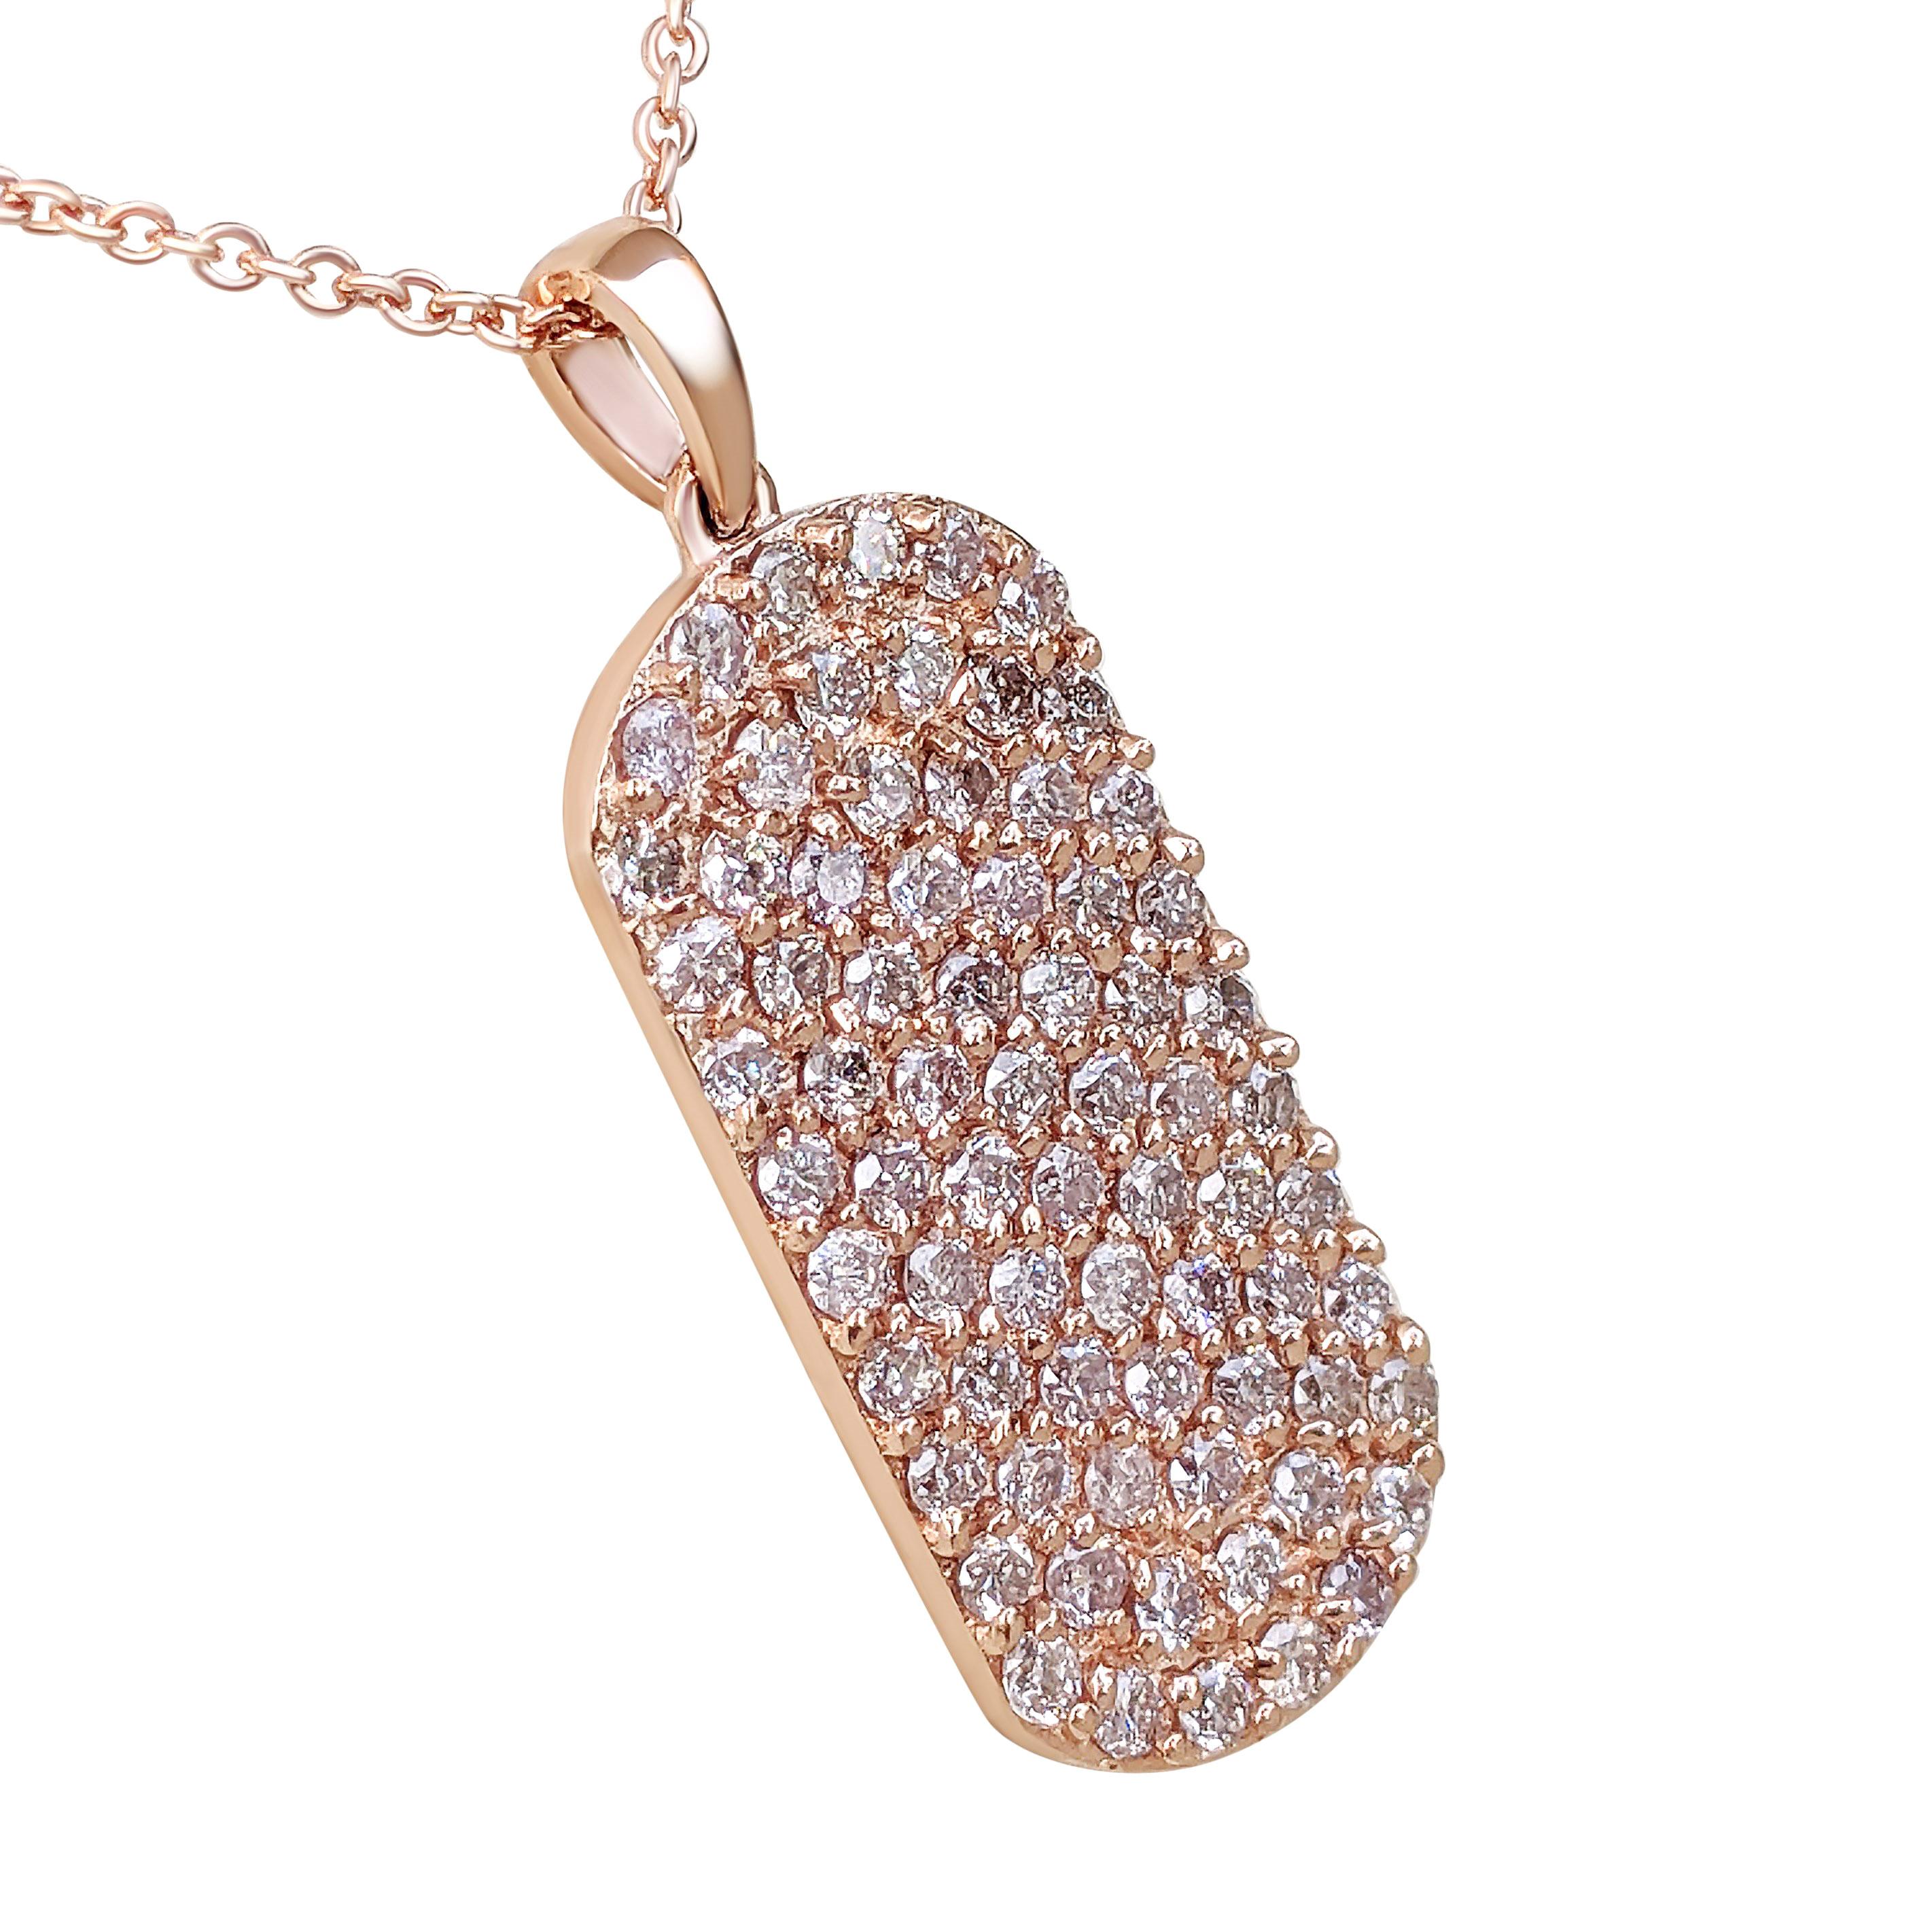 KEIN RESERVE! 1.10Ct Fancy Pink Diamond 14 kt. Gold-Anhänger-Halskette 1